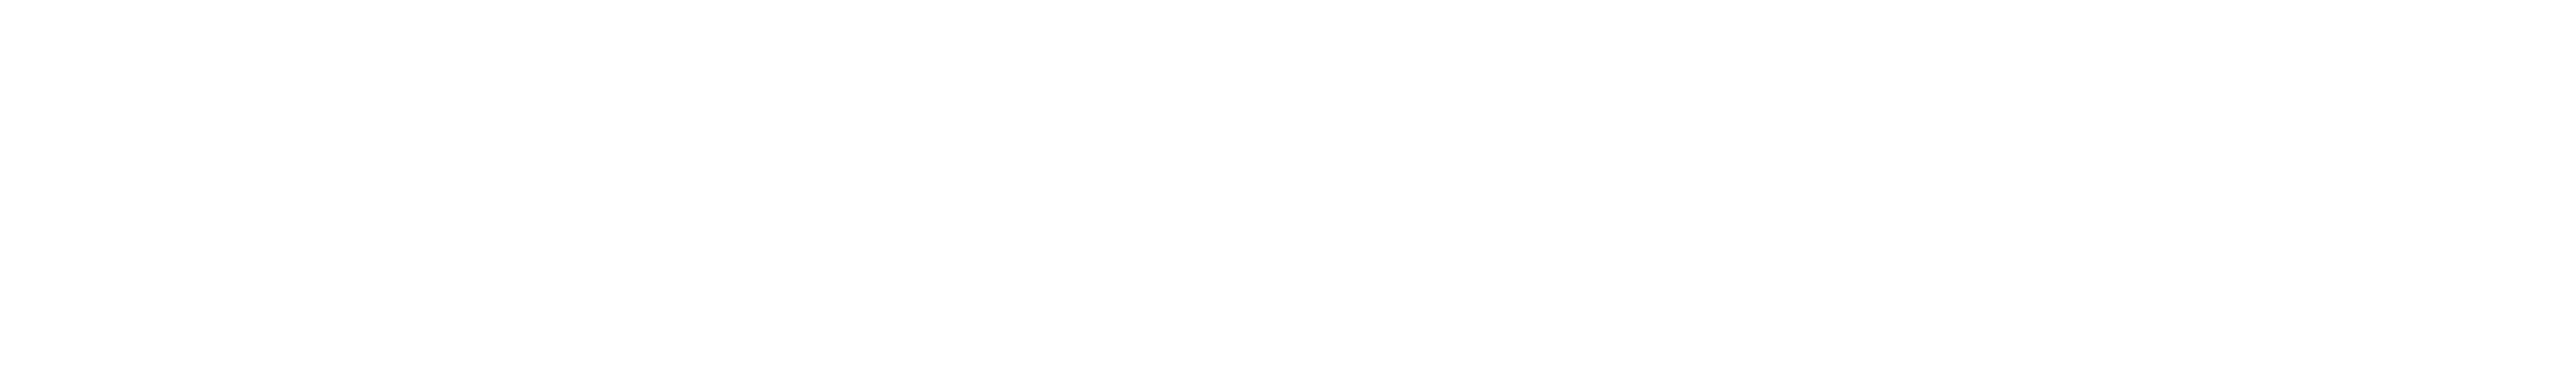 Uplifing Event Logo